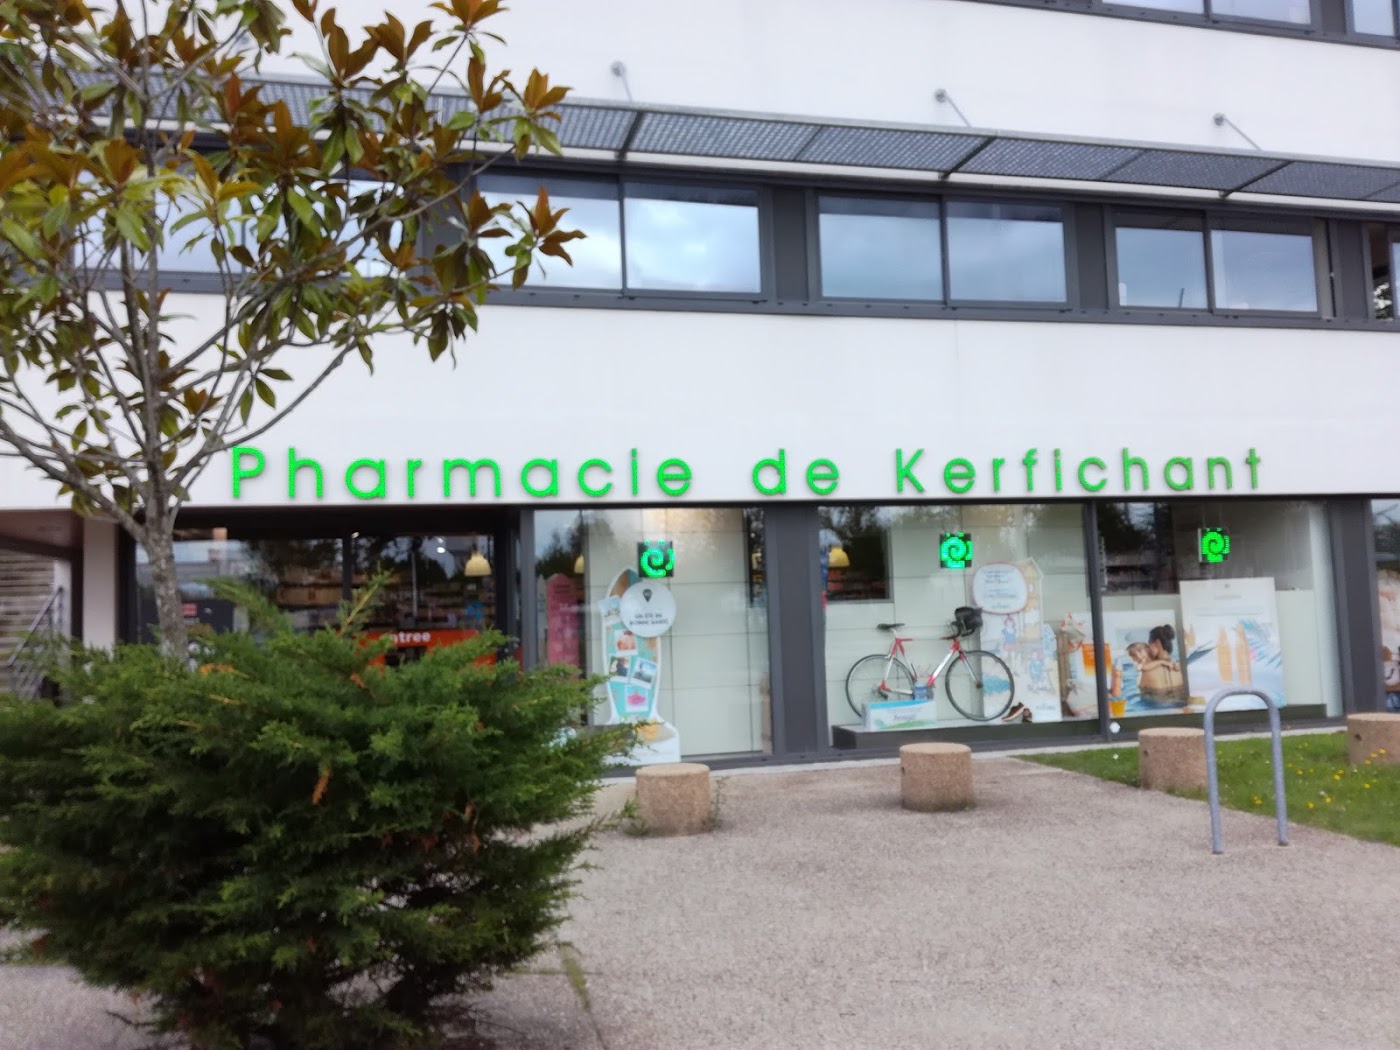 Pharmacie de Kerfichant